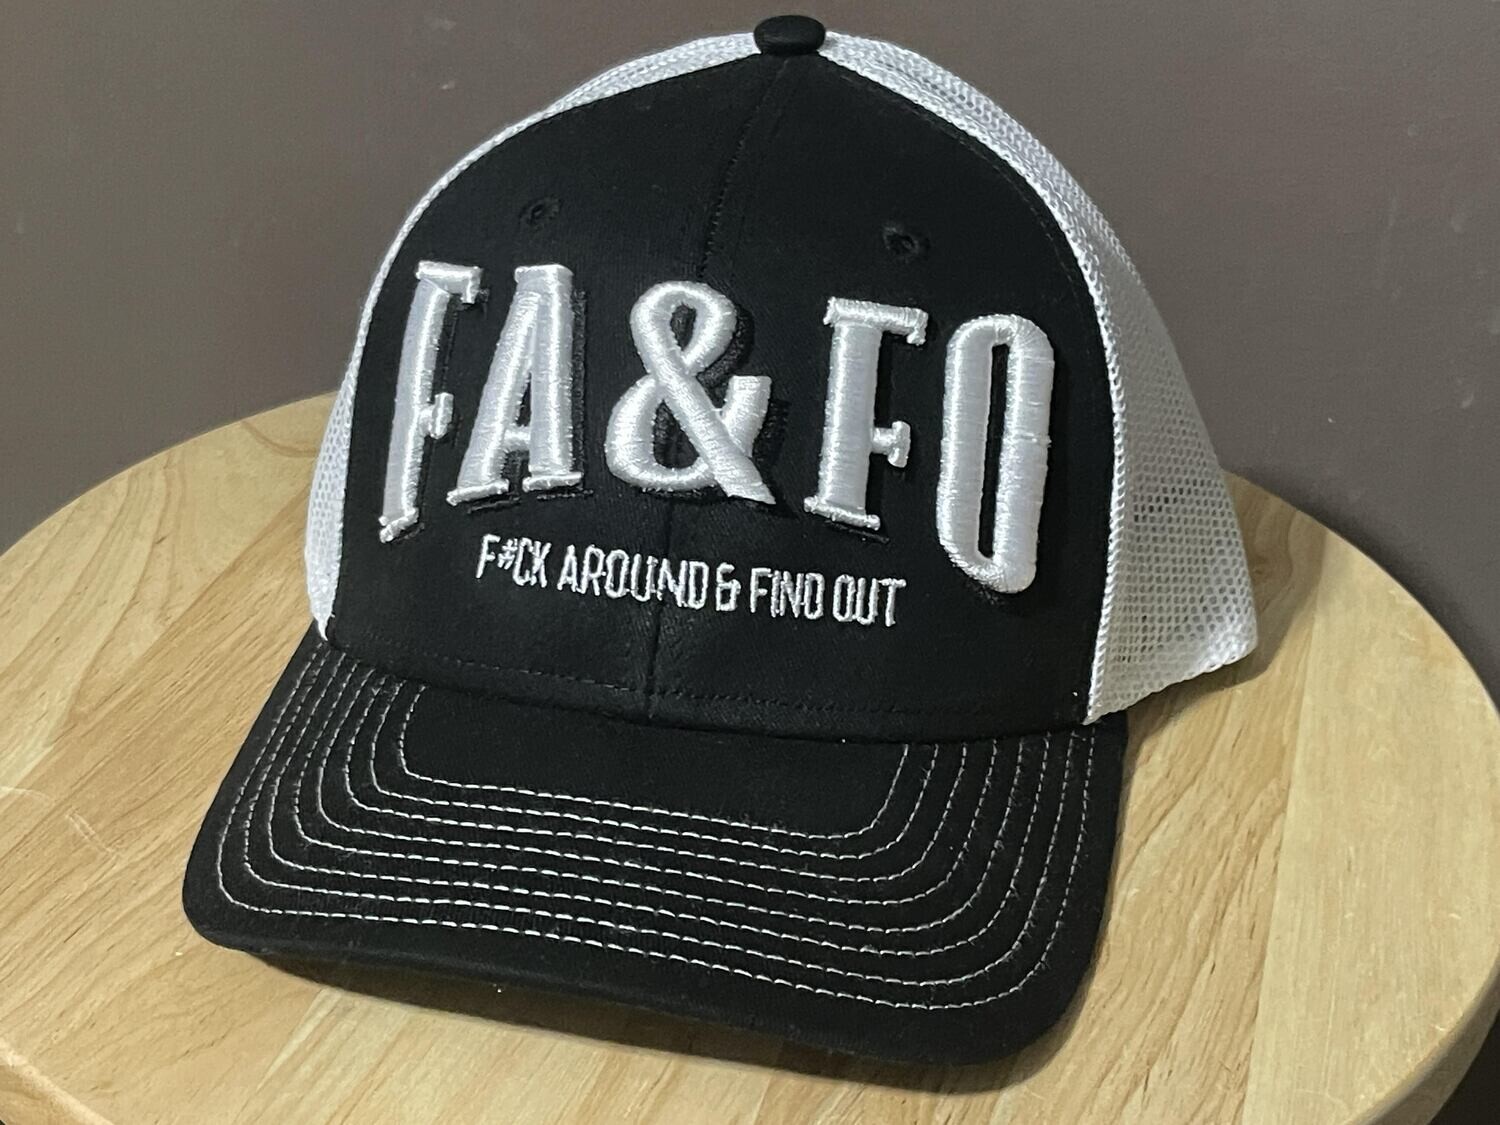 FA&FO Hat Puff Design